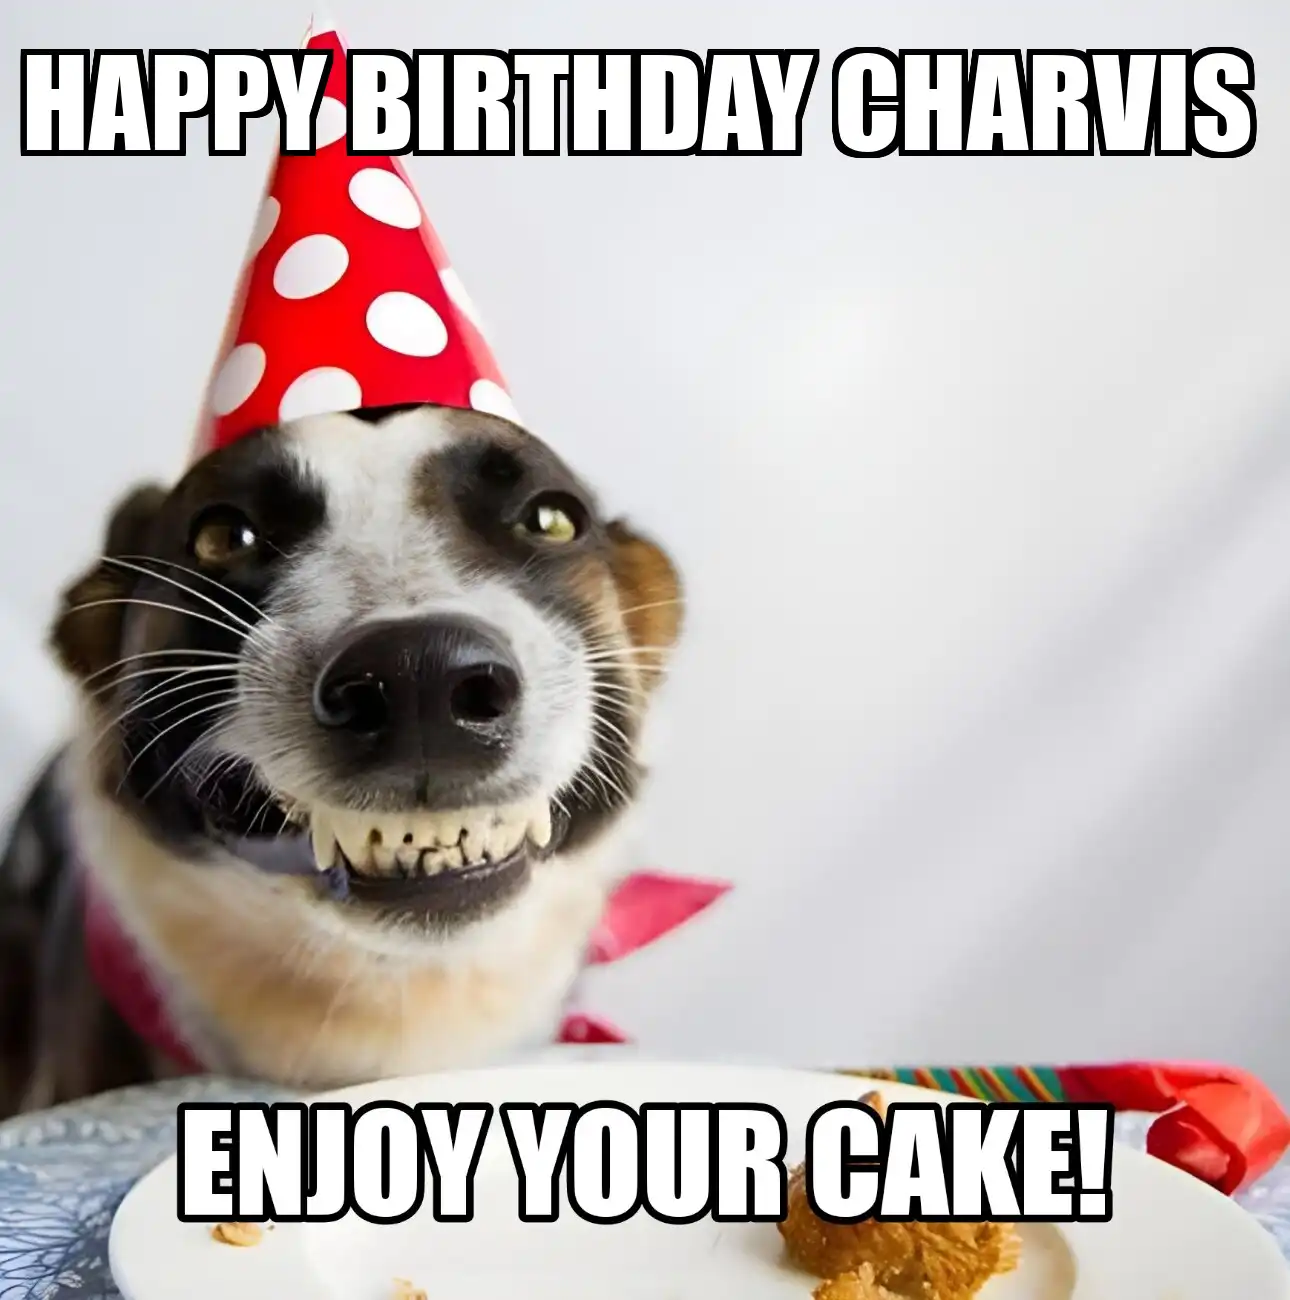 Happy Birthday Charvis Enjoy Your Cake Dog Meme